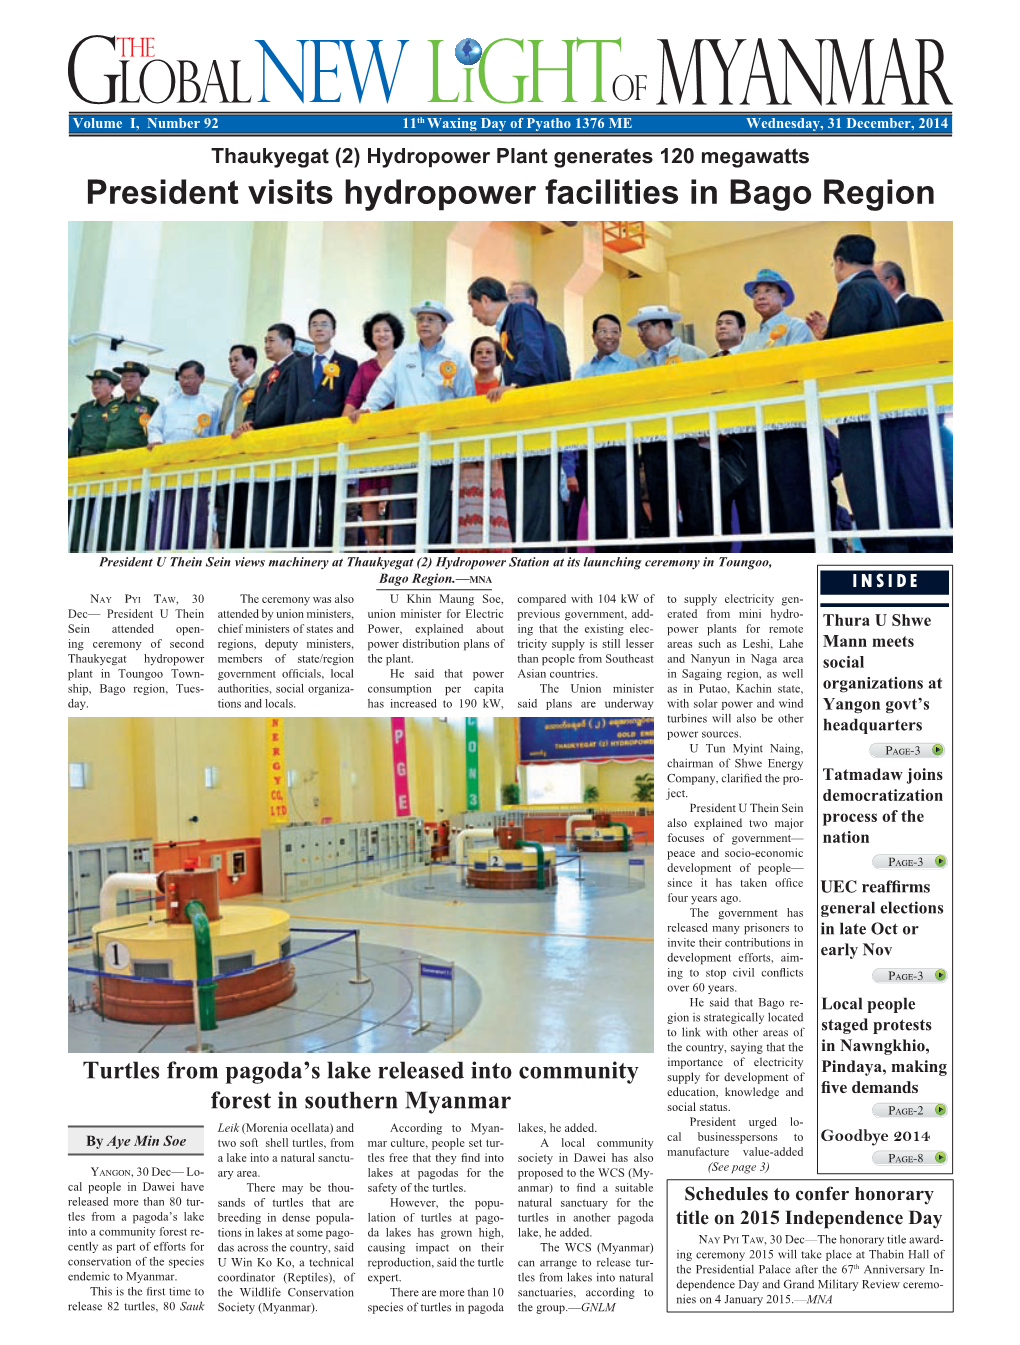 President Visits Hydropower Facilities in Bago Region